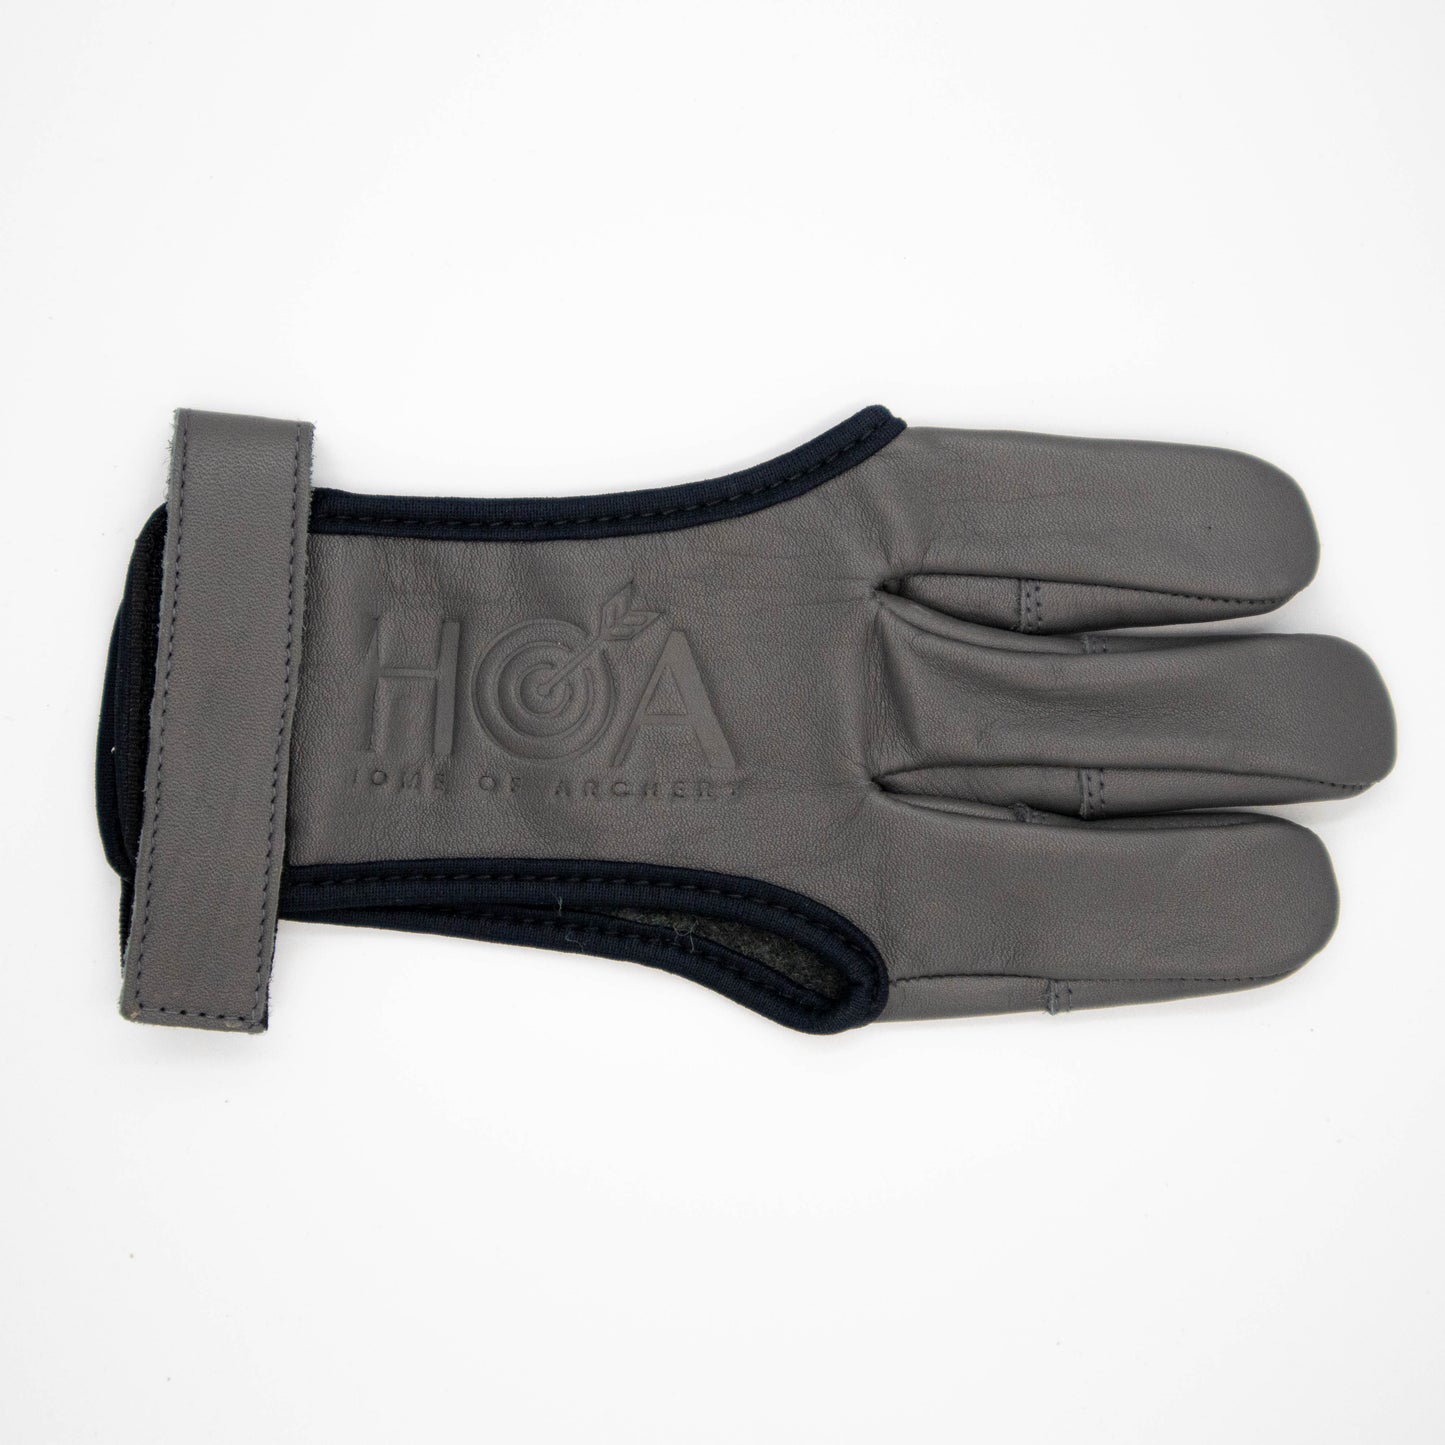 HOA Glove